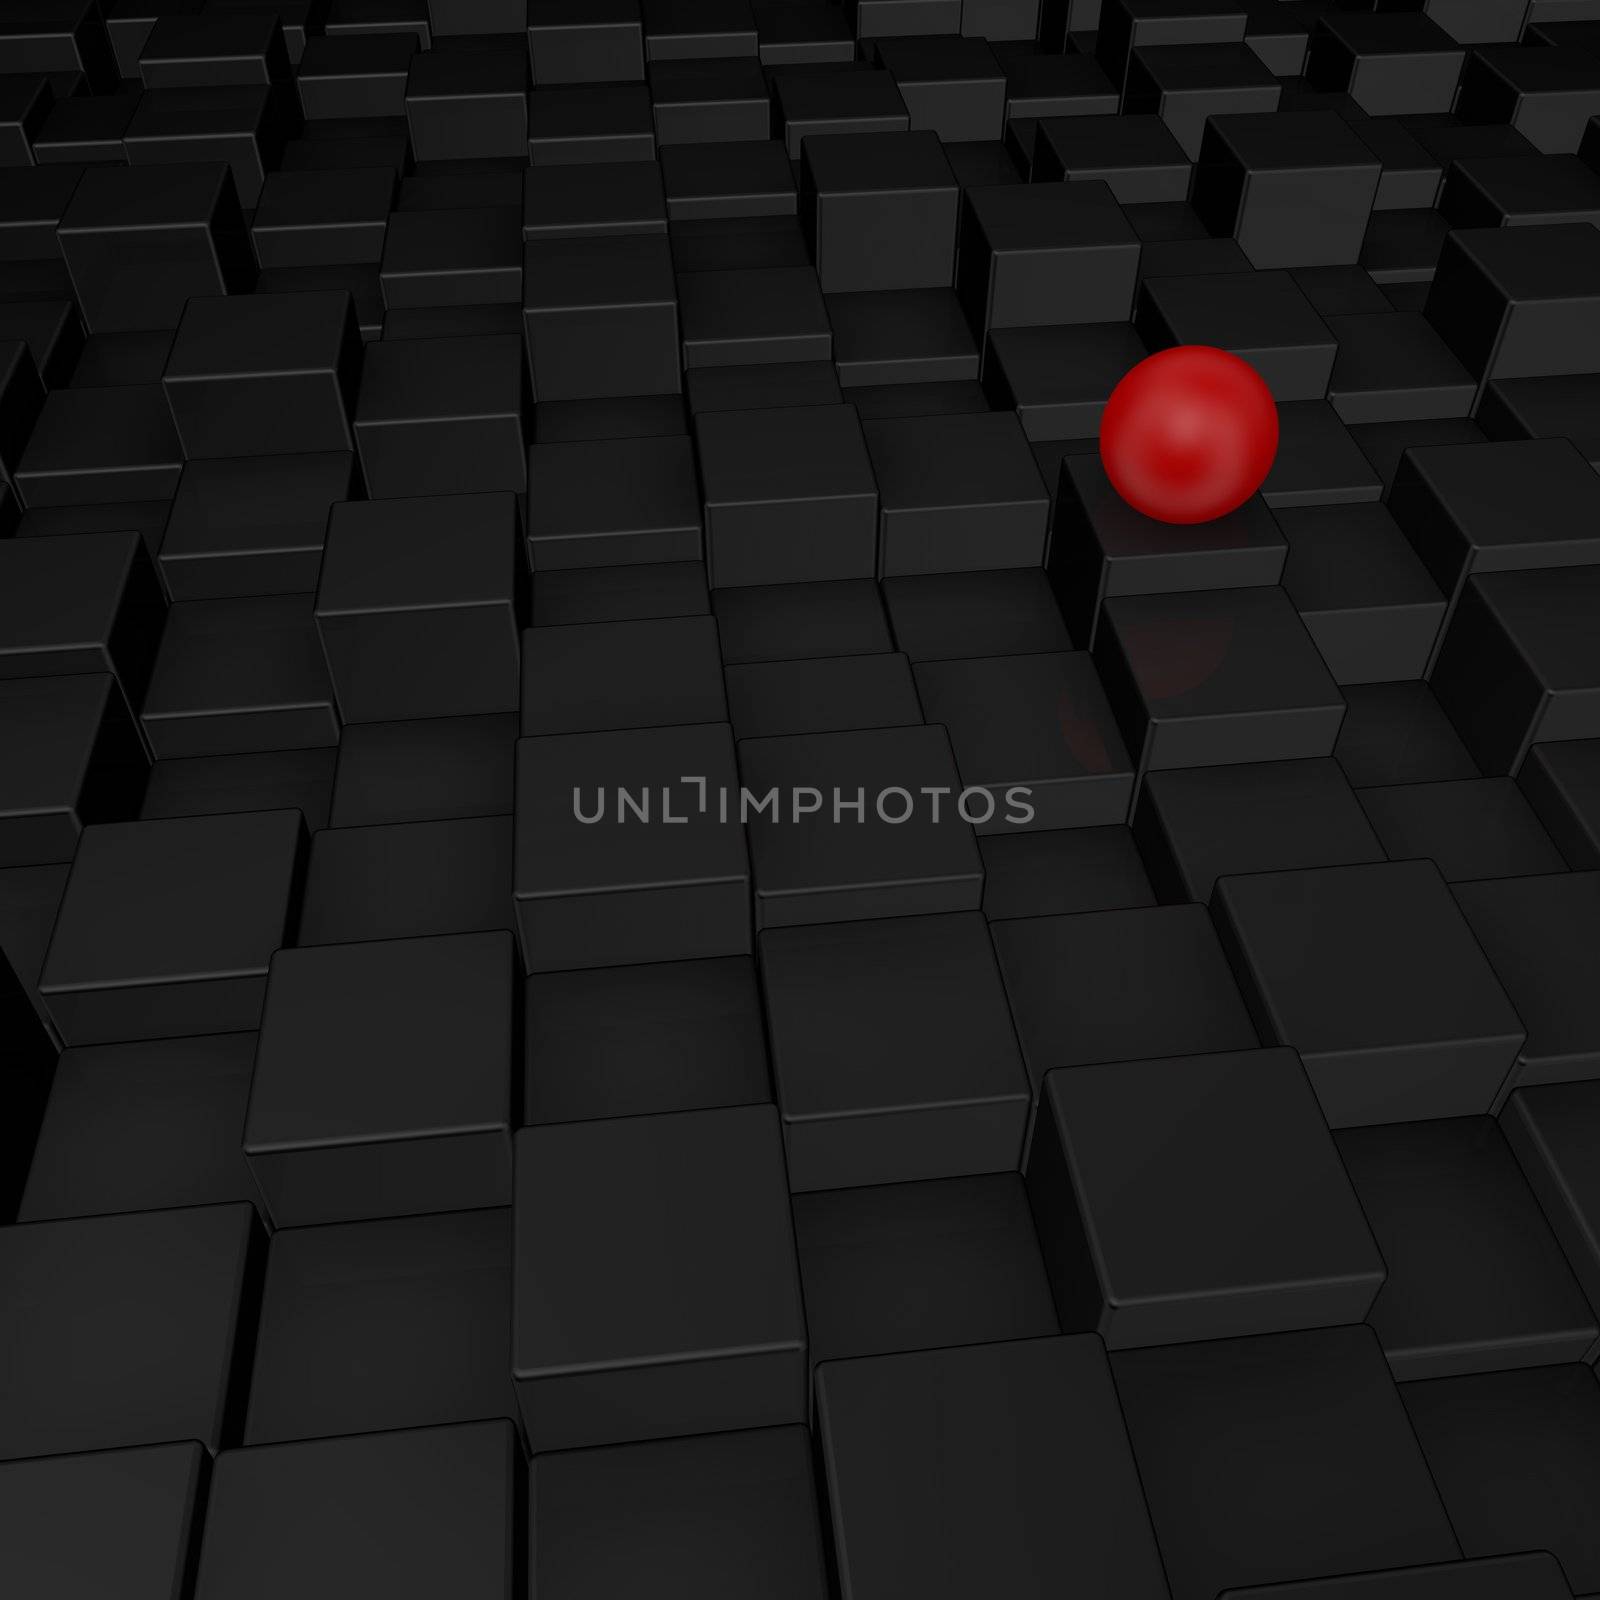 red sphere on black cubes surface - 3d illustration